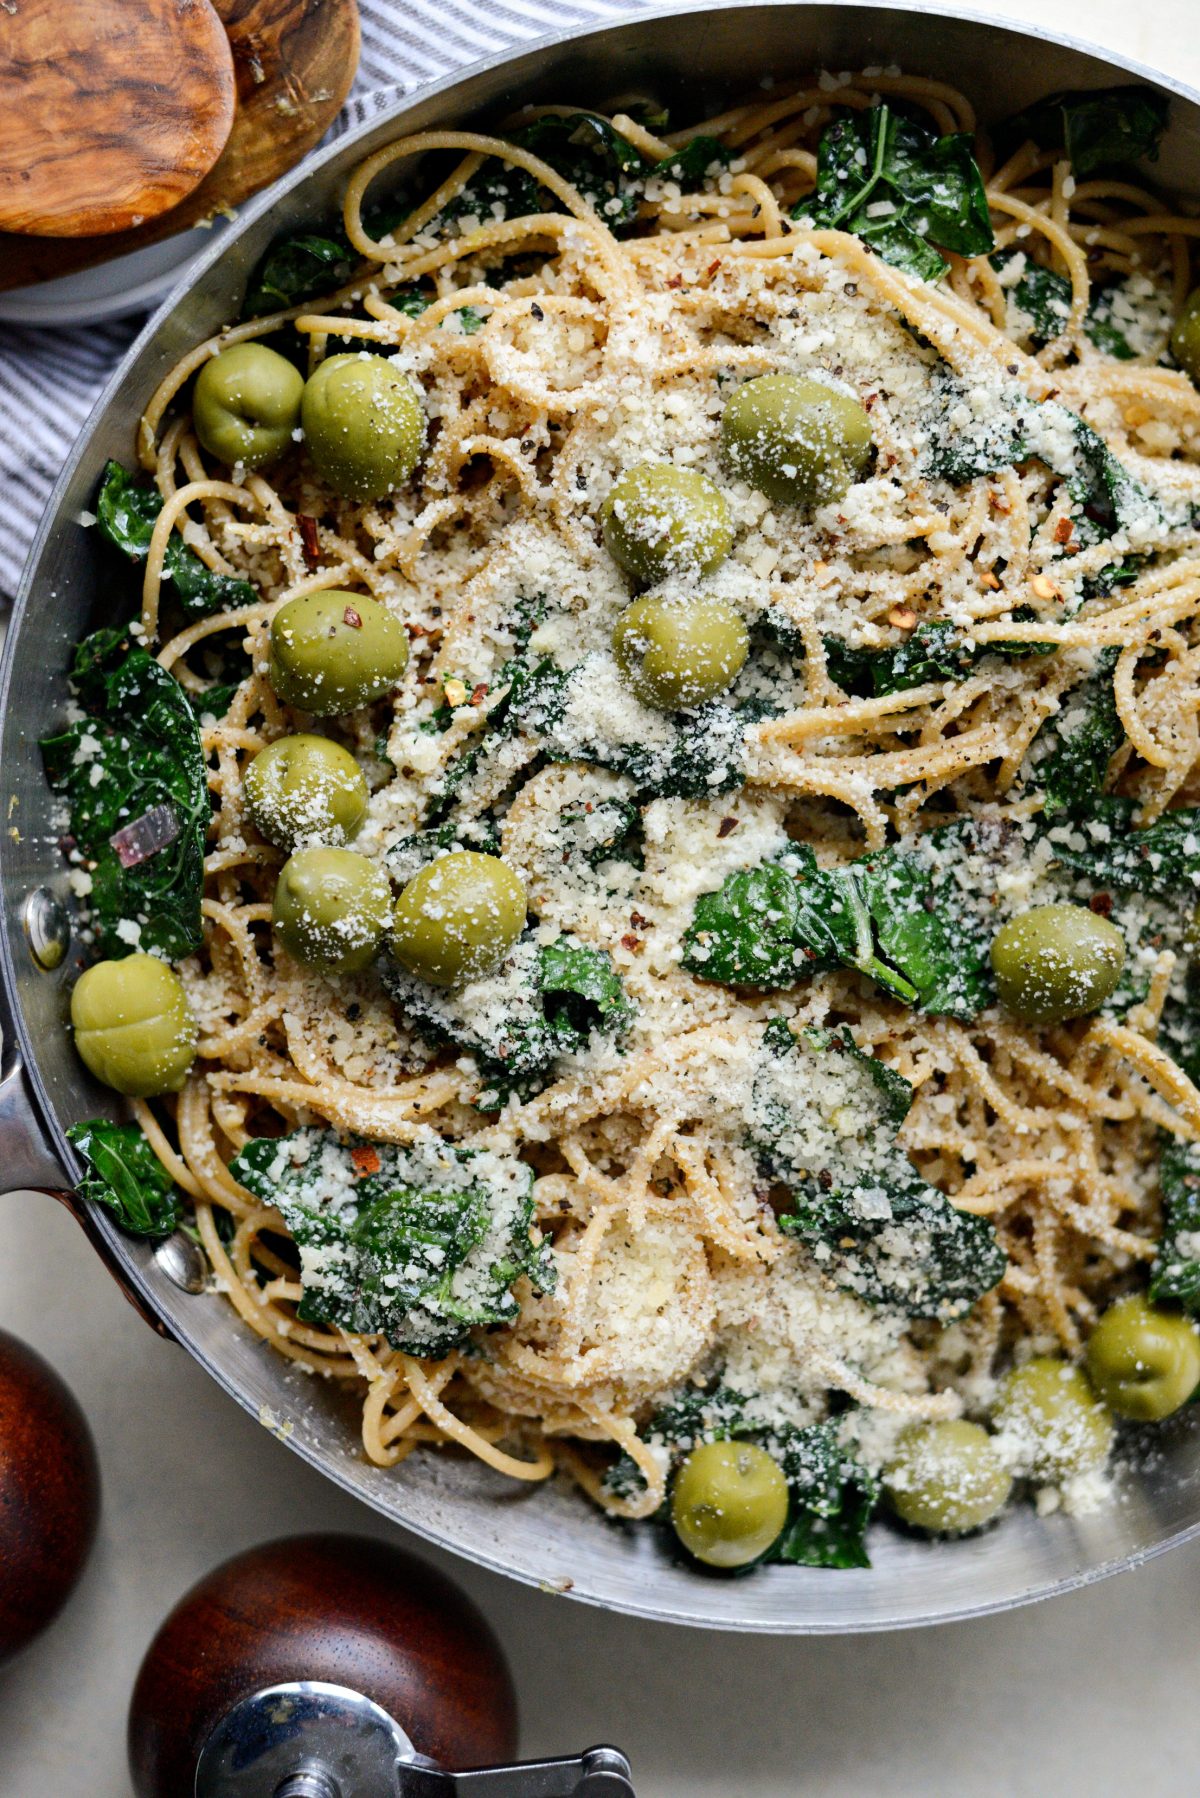 Lemon Parmesan and Kale Spaghetti with Olives